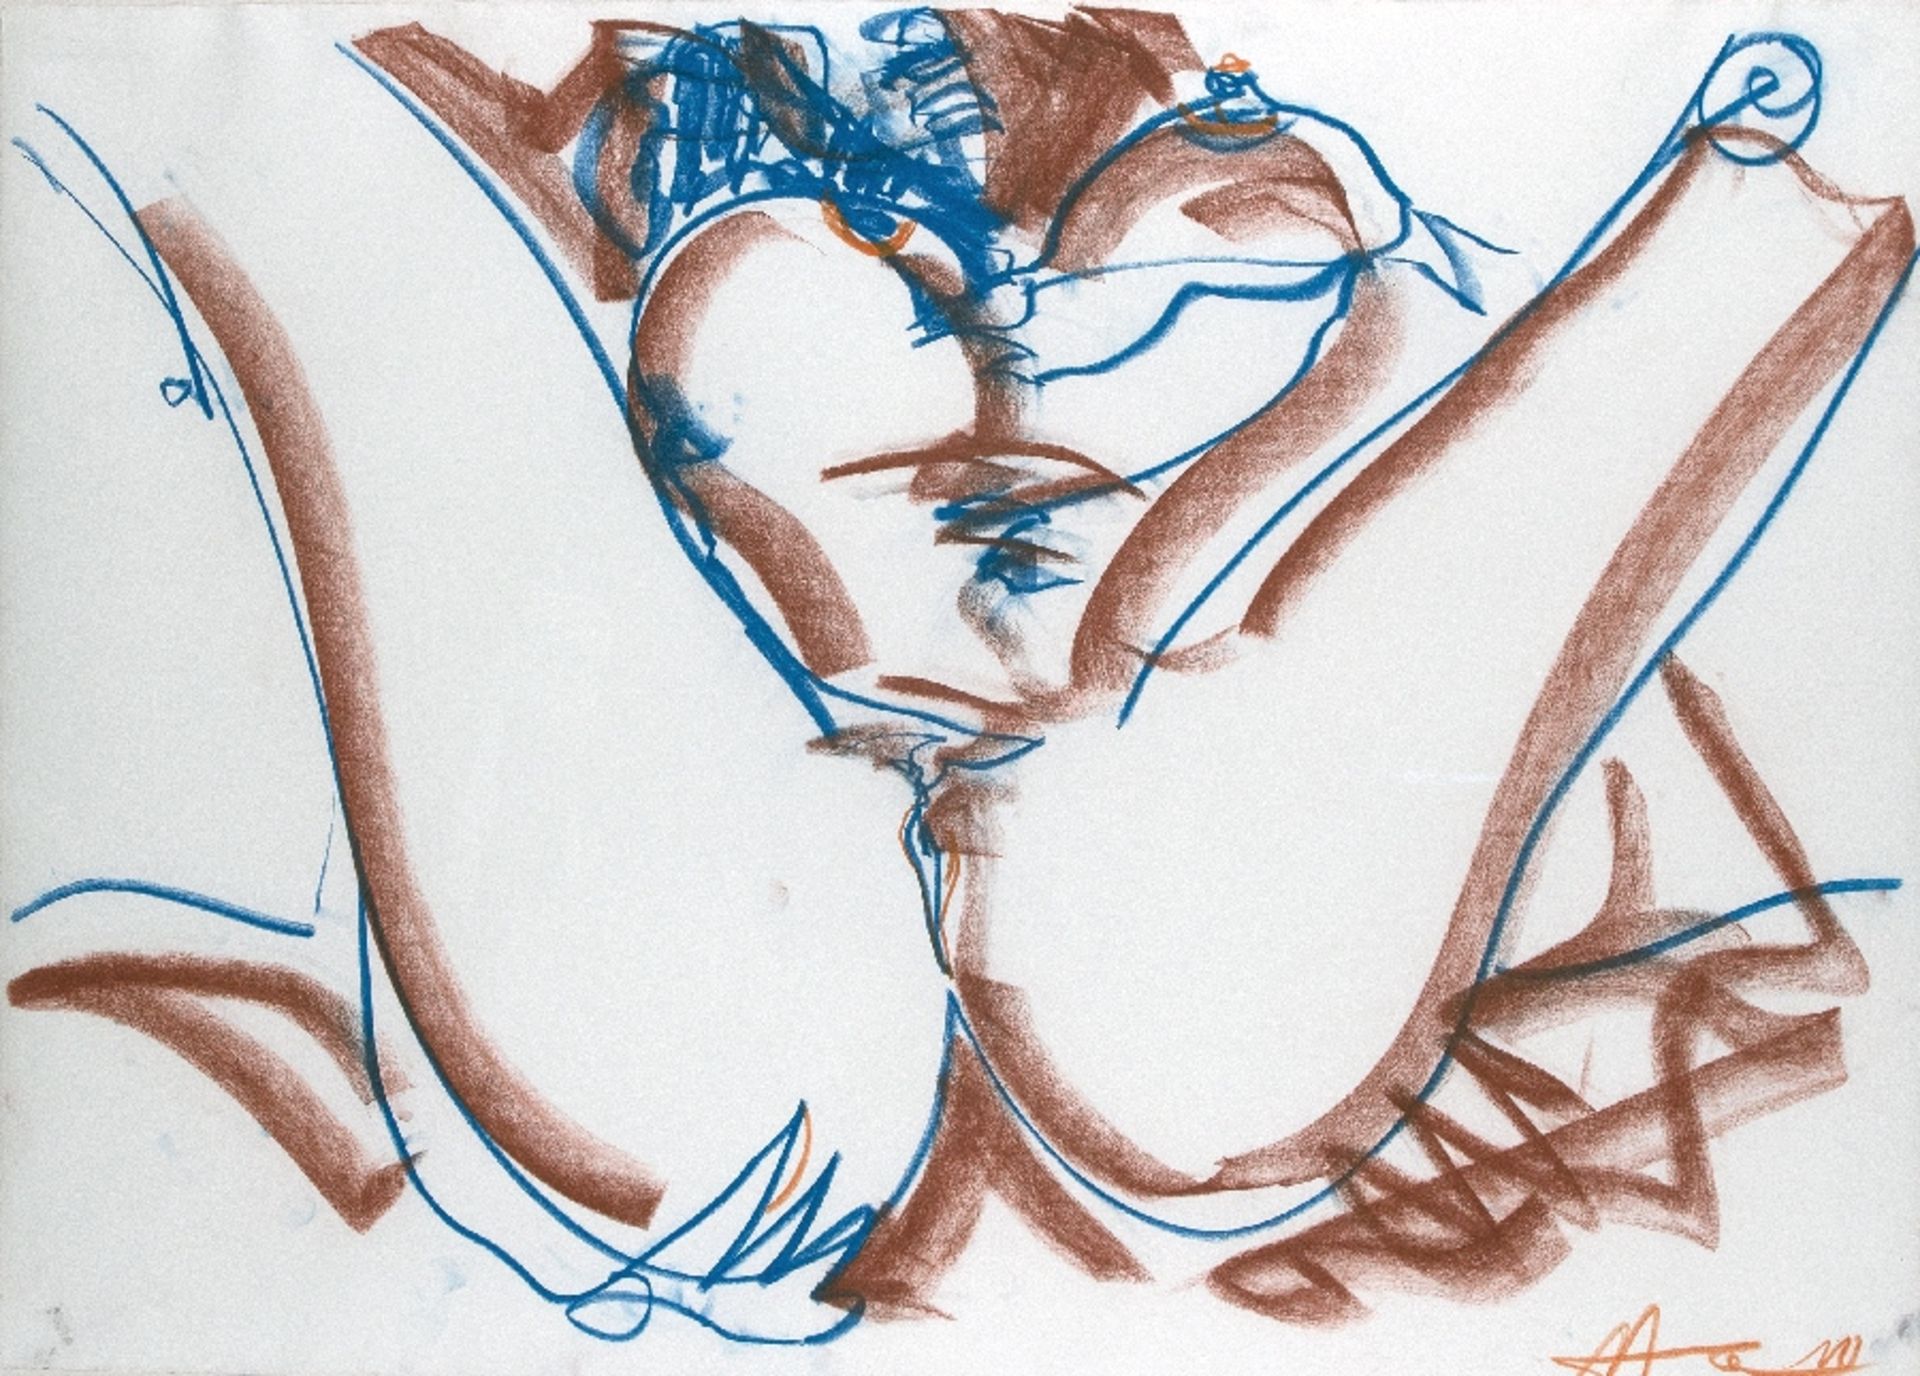 Markus Tollmann1963 Gelsenkirchen-BuerLying nudeColored chalks on paper; H 770 mm, W 1070 mm; signed